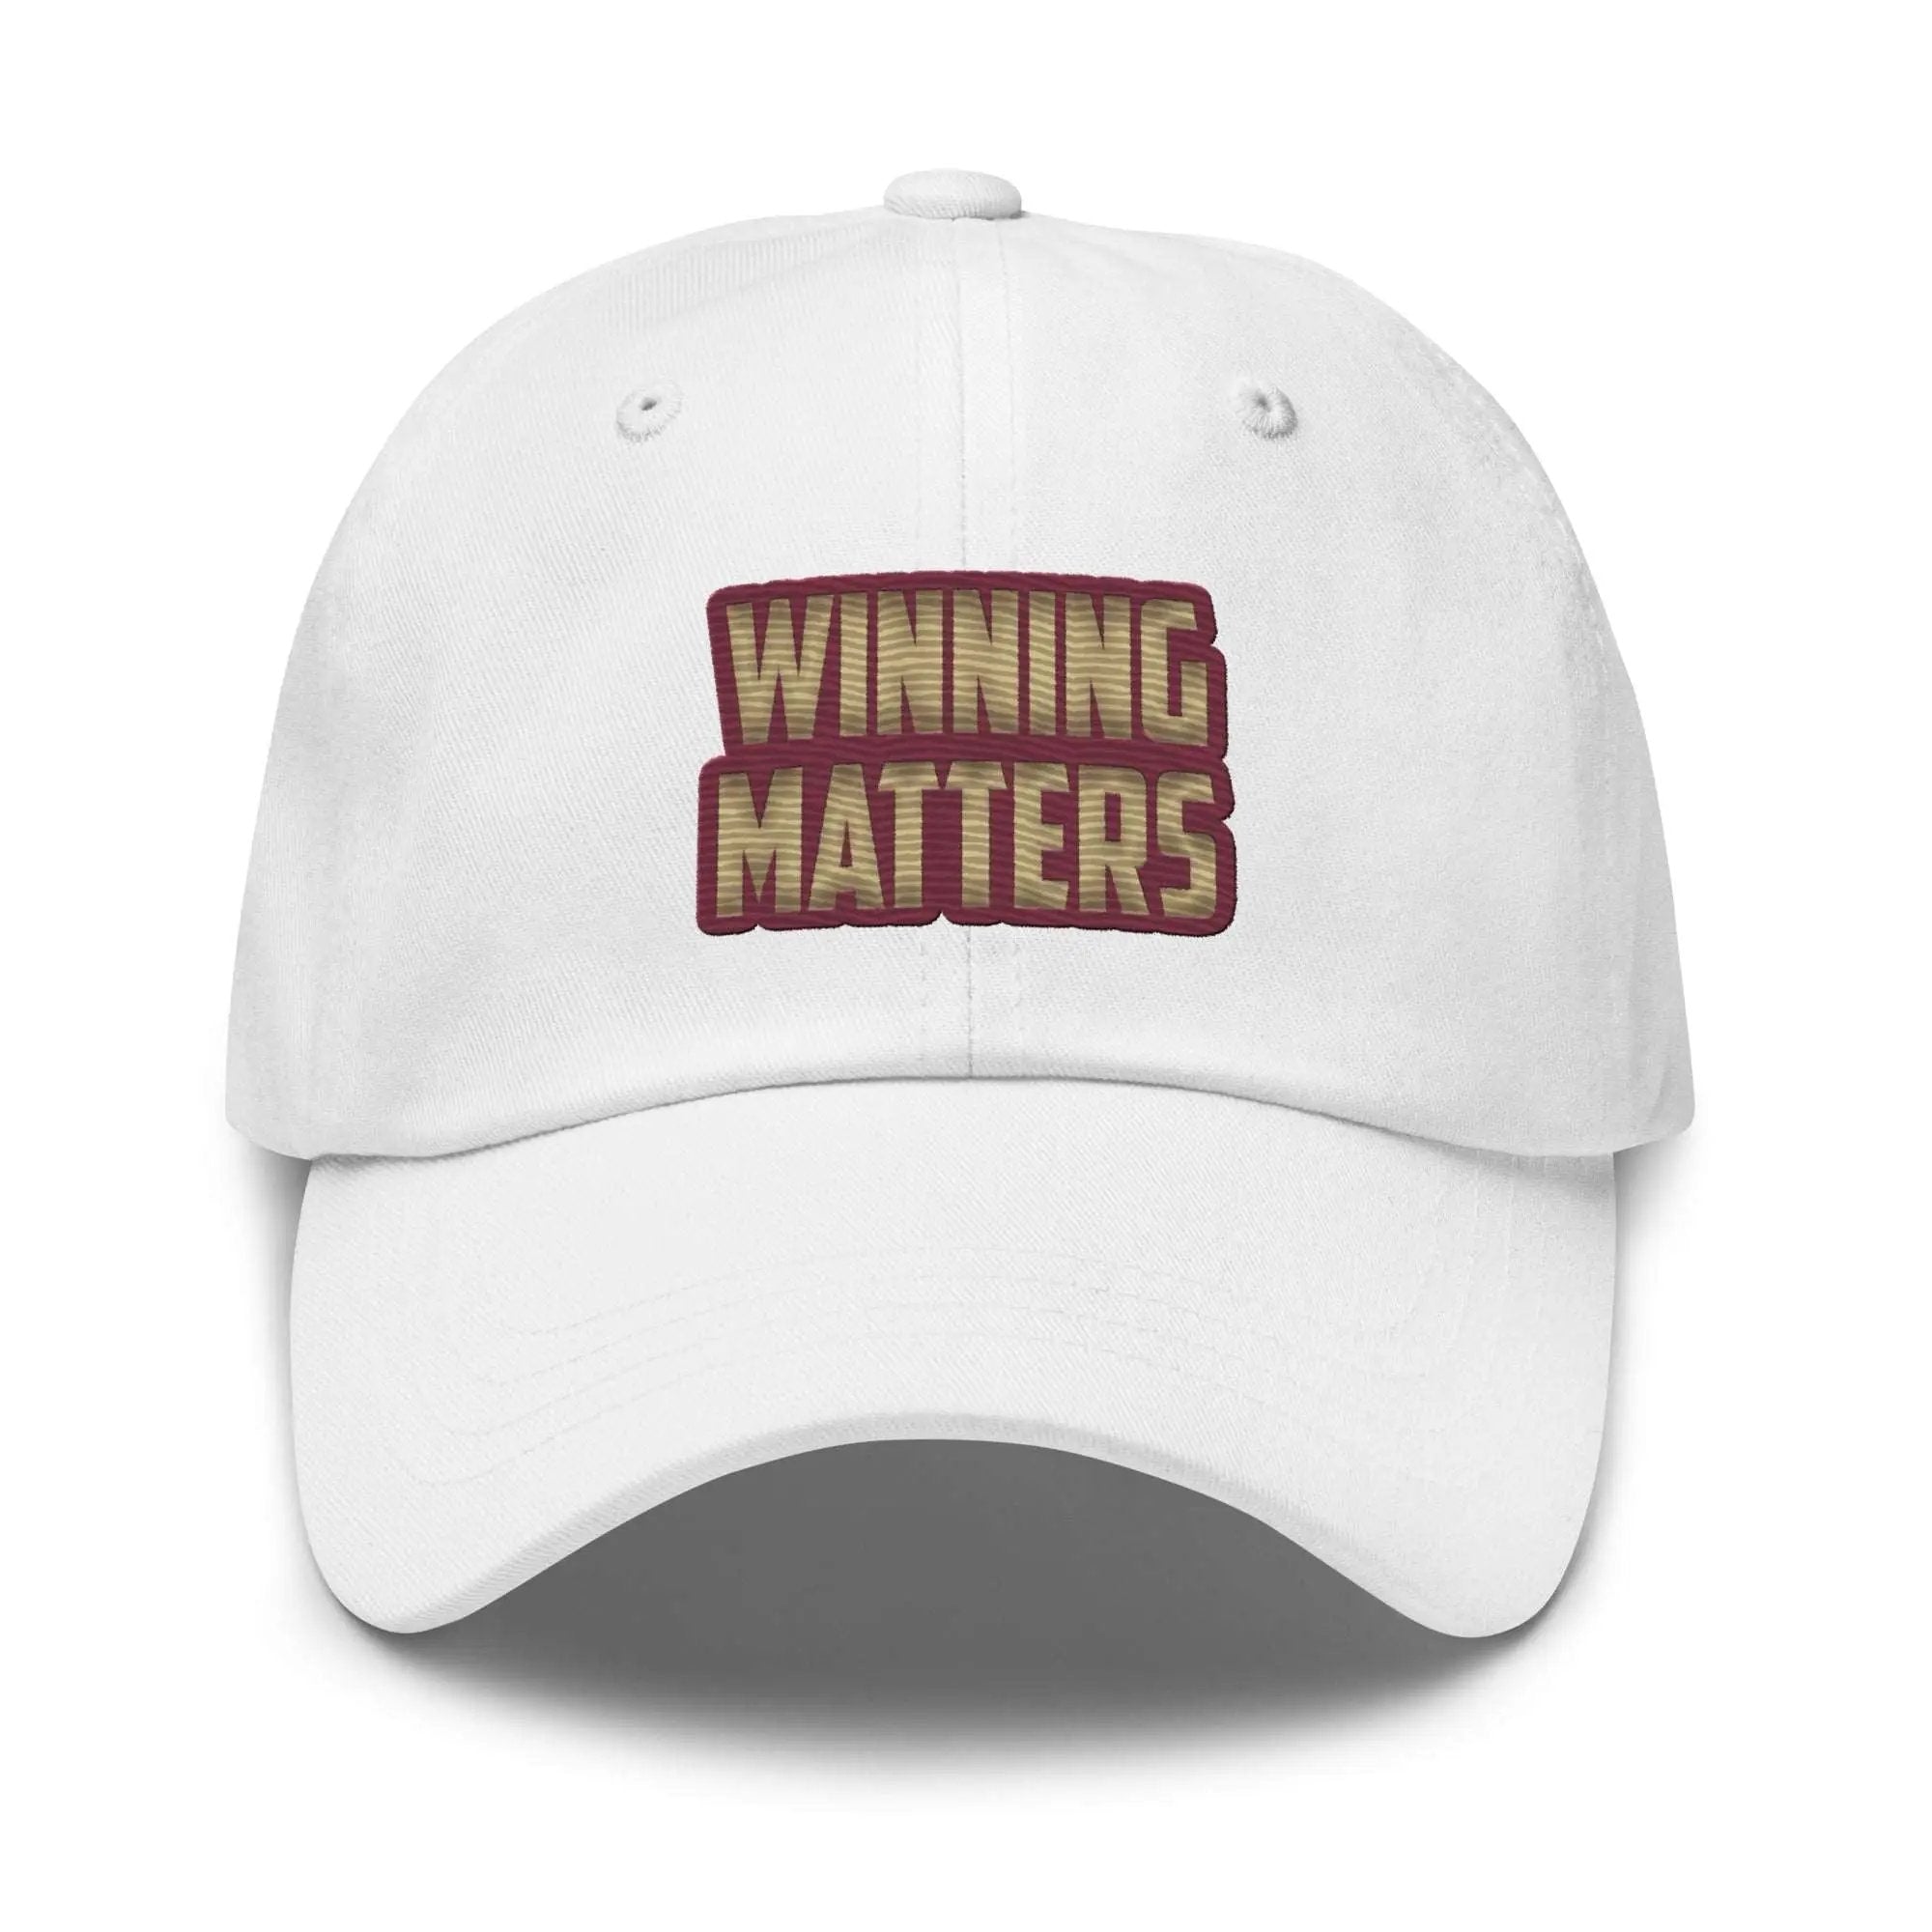 Winning Matters Dad hat